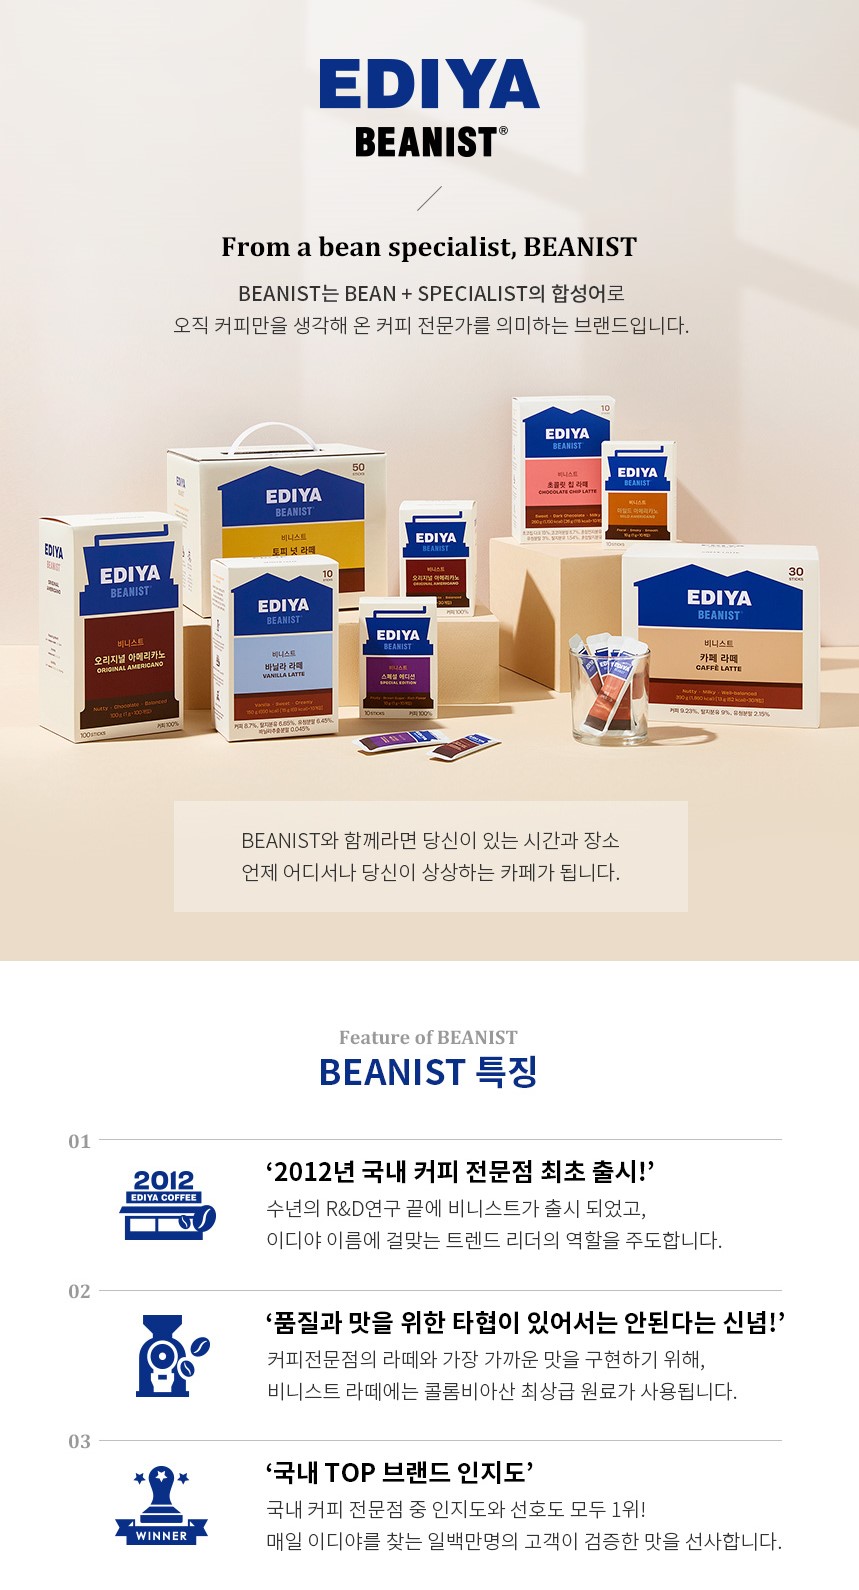 韓國食品-[Ediya Coffee] Beanist Caffe Latte 13g*10